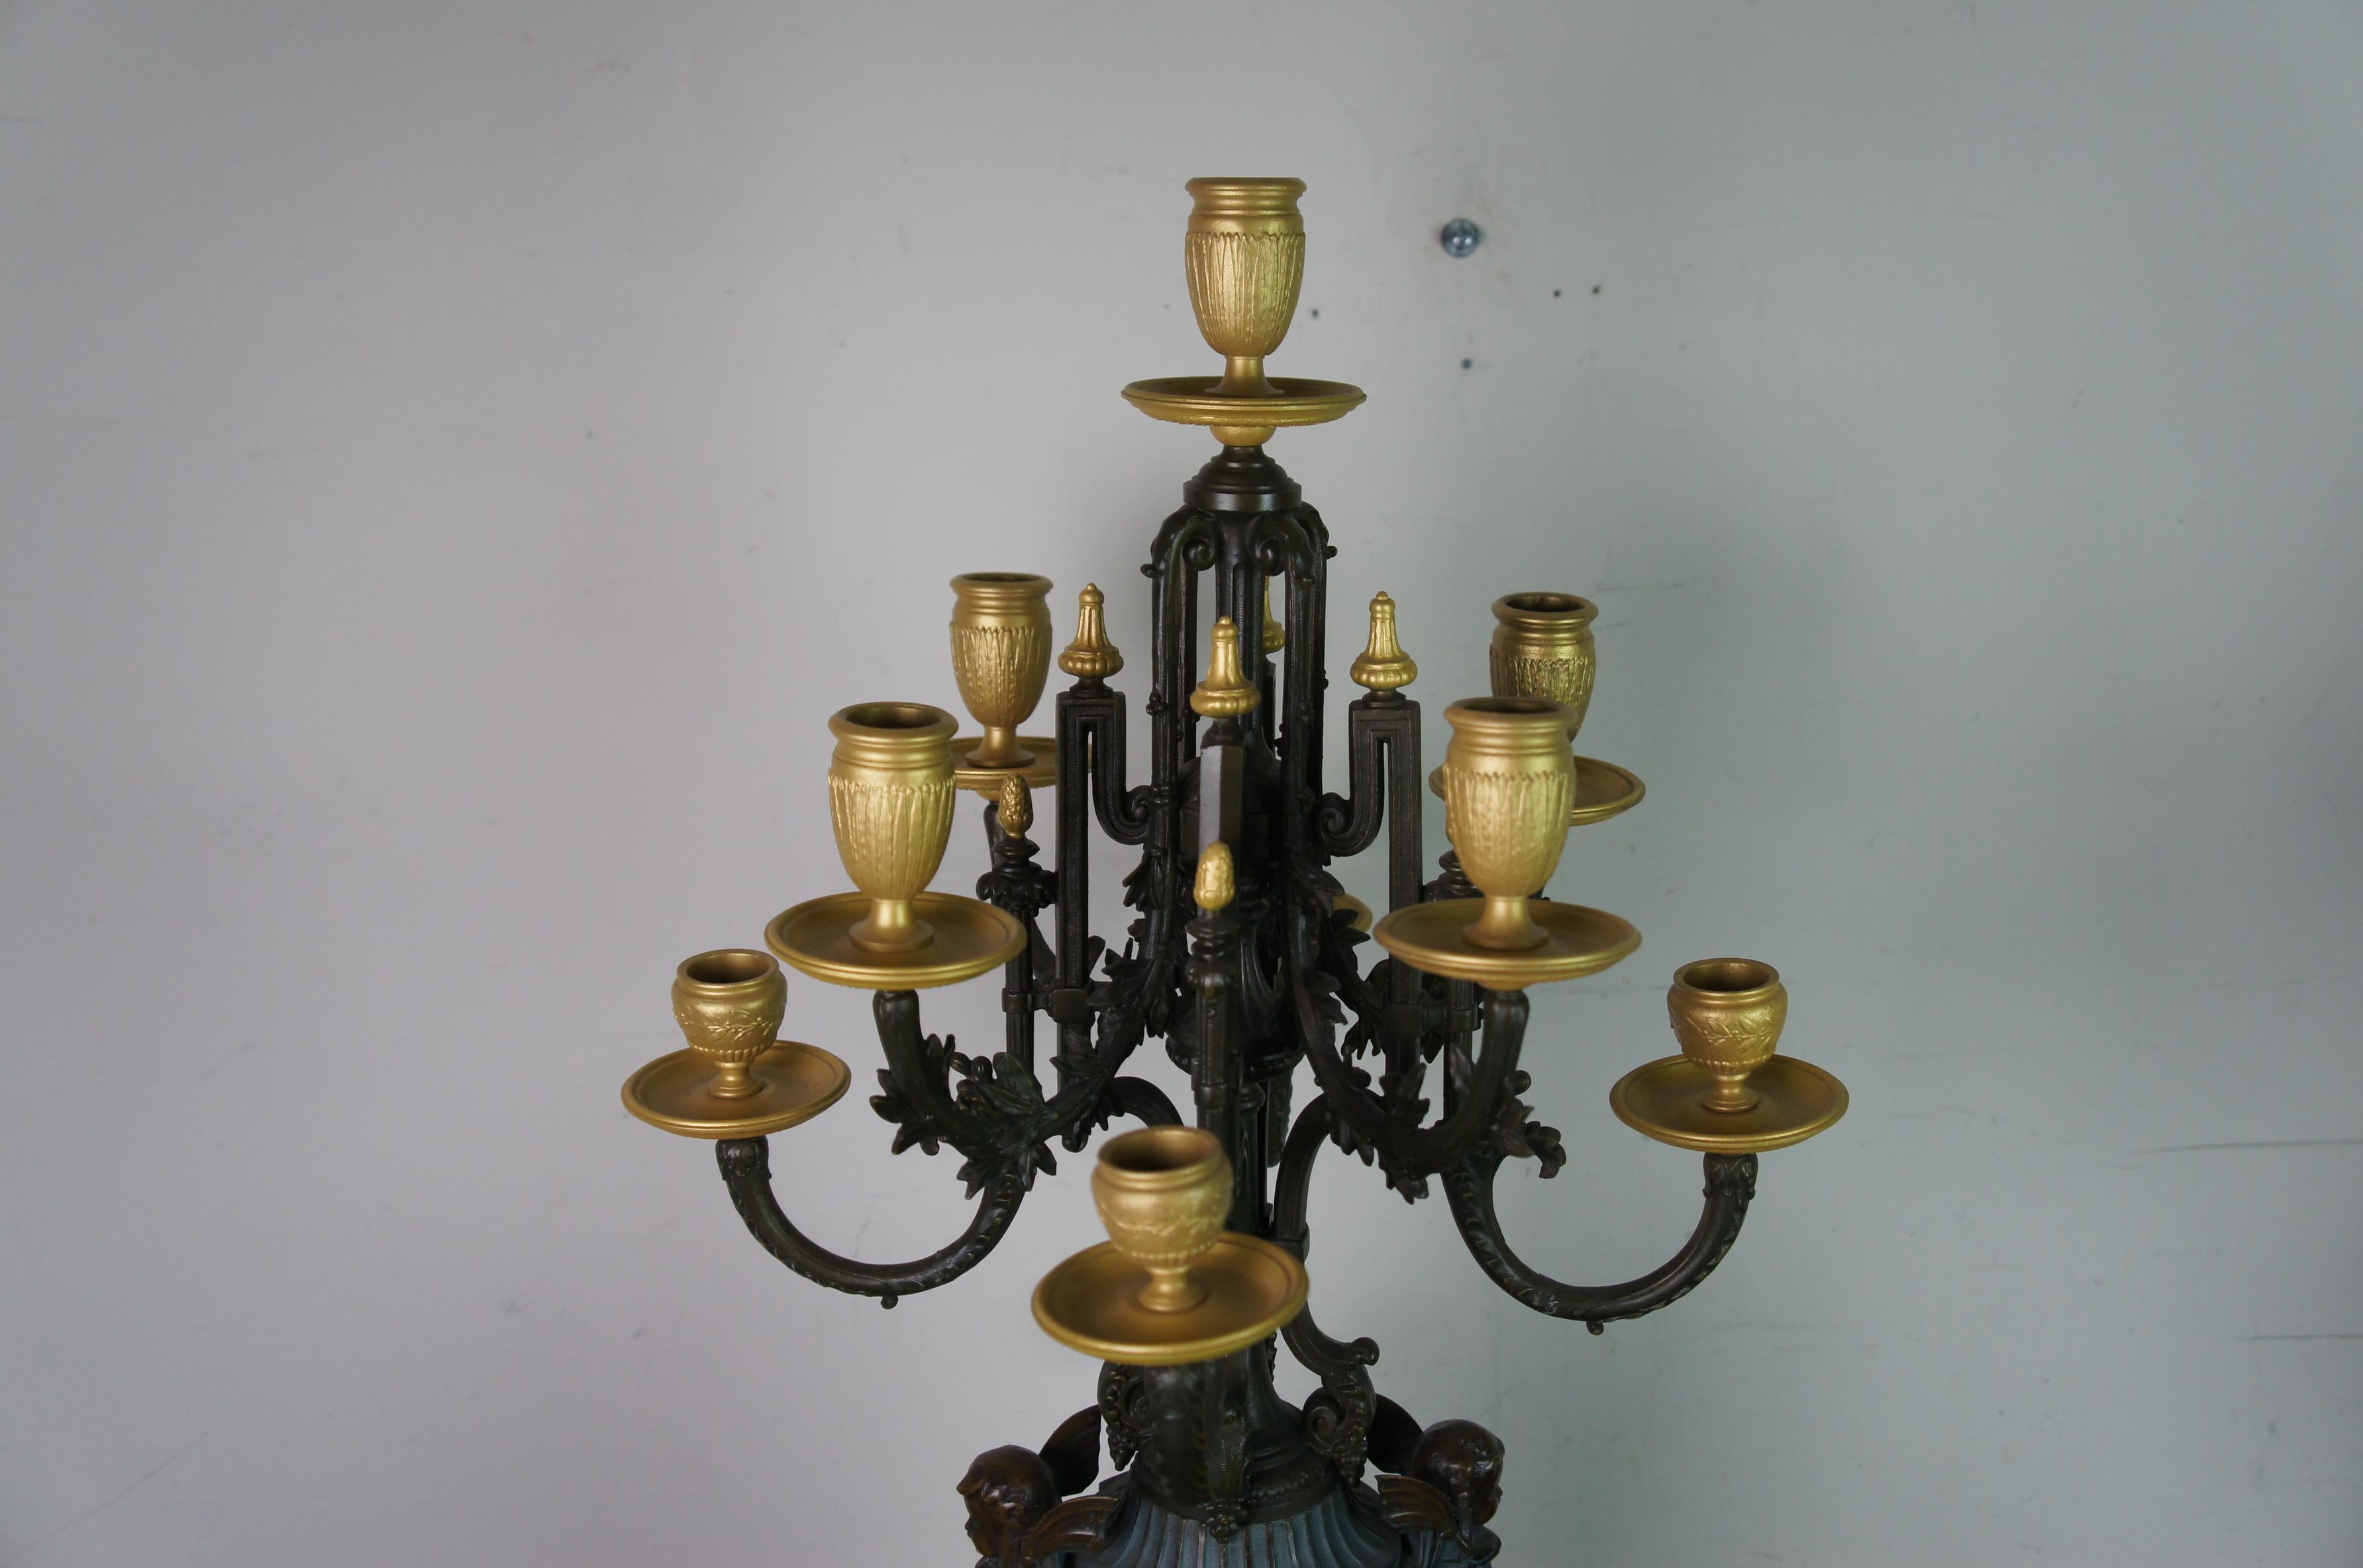 Antique French Auguste Moreau Gilt Bronze Mantel Garniture Clock Candelabra For Sale 1